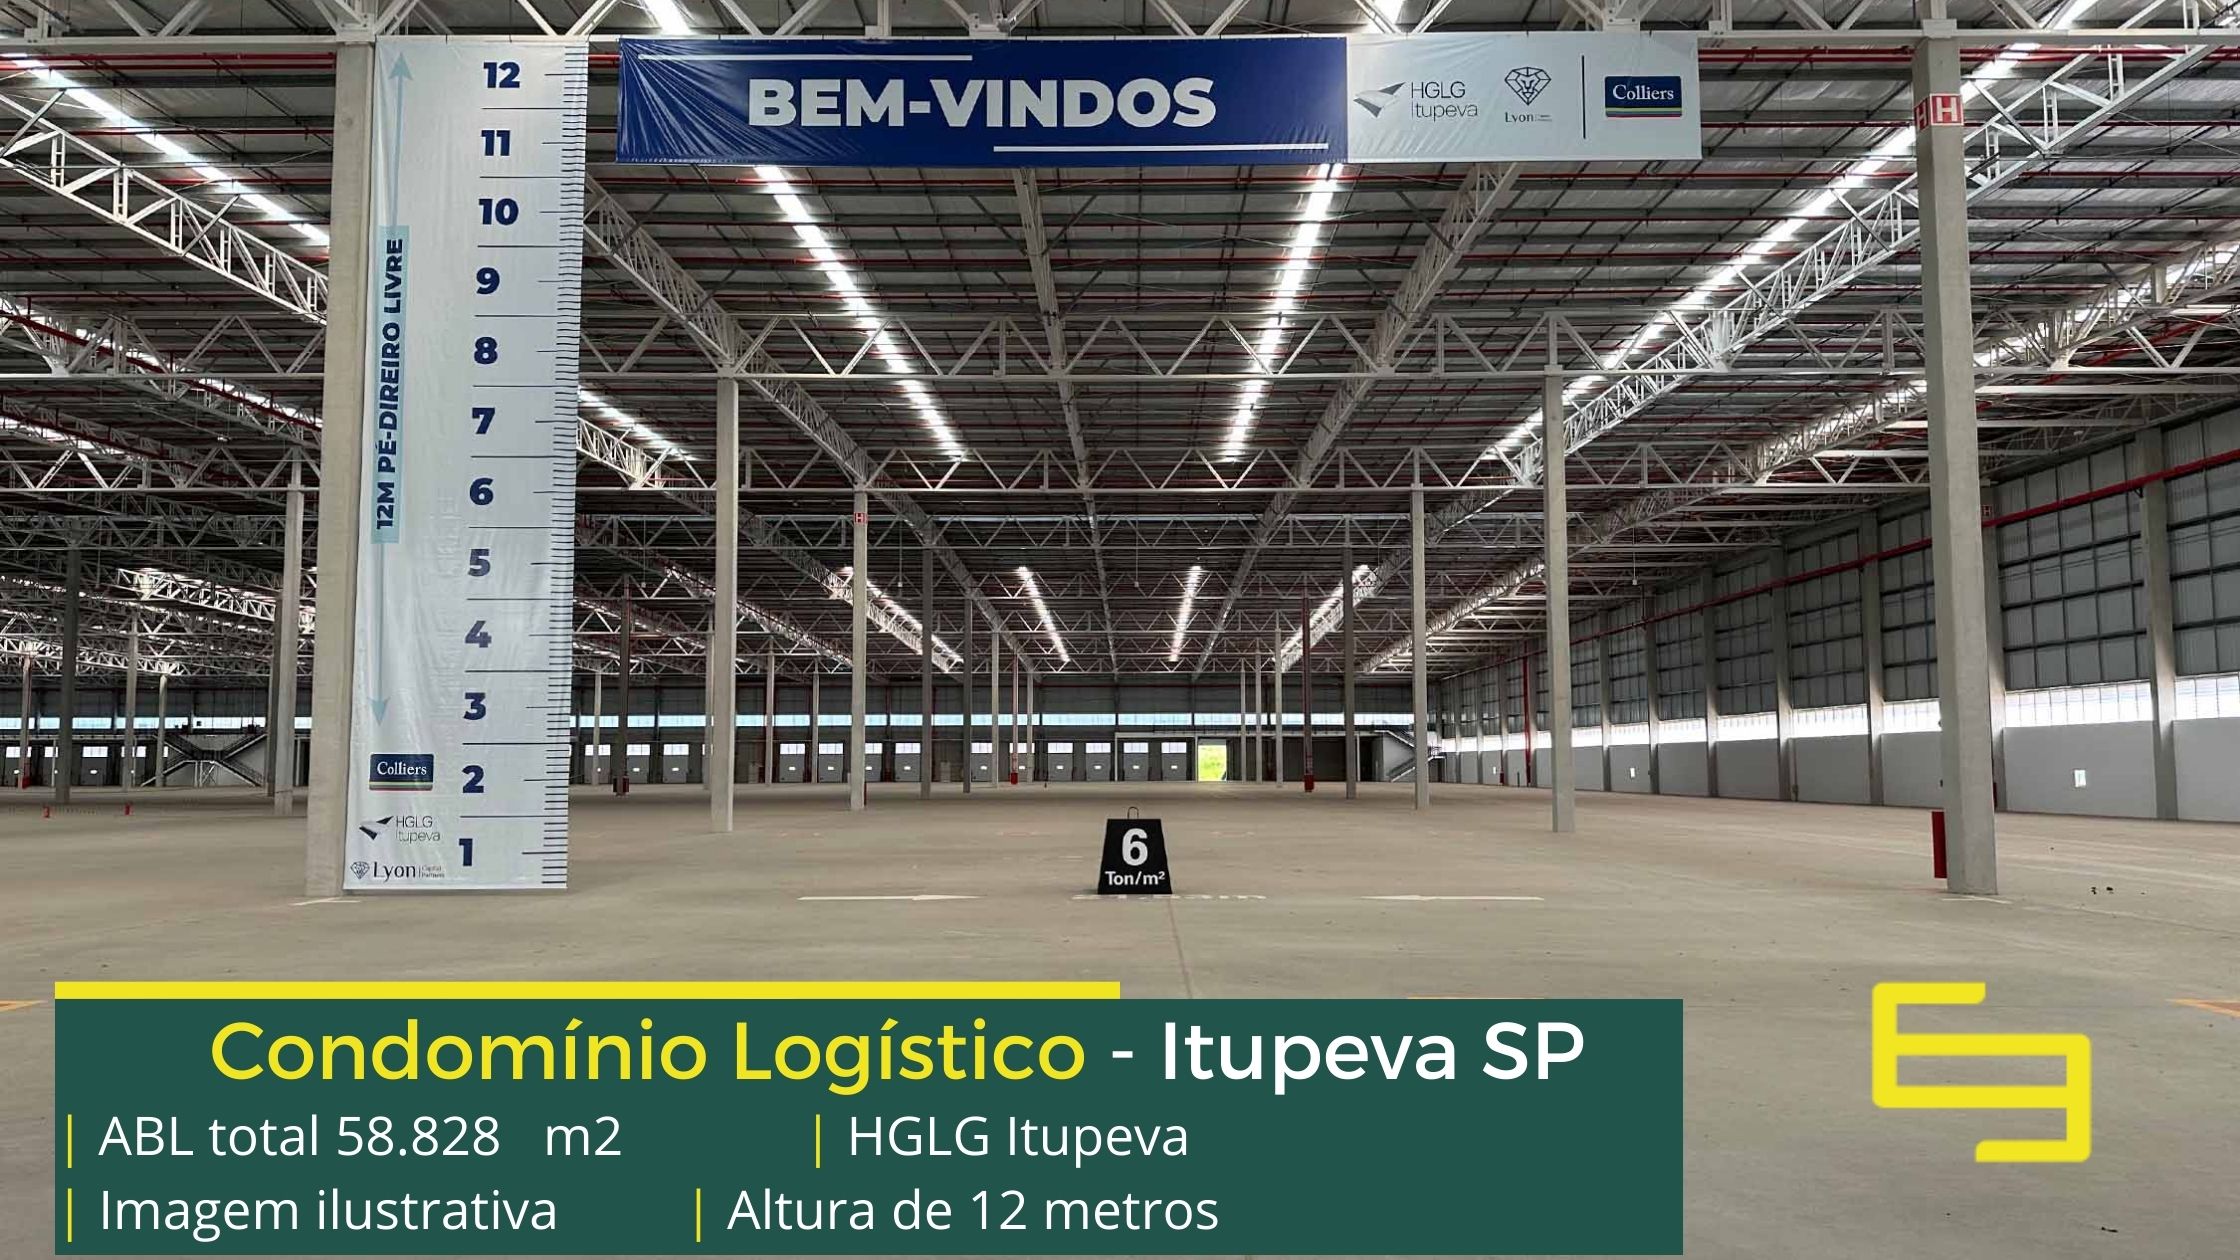 Industrial HGLG Itupeva - Itupeva SP